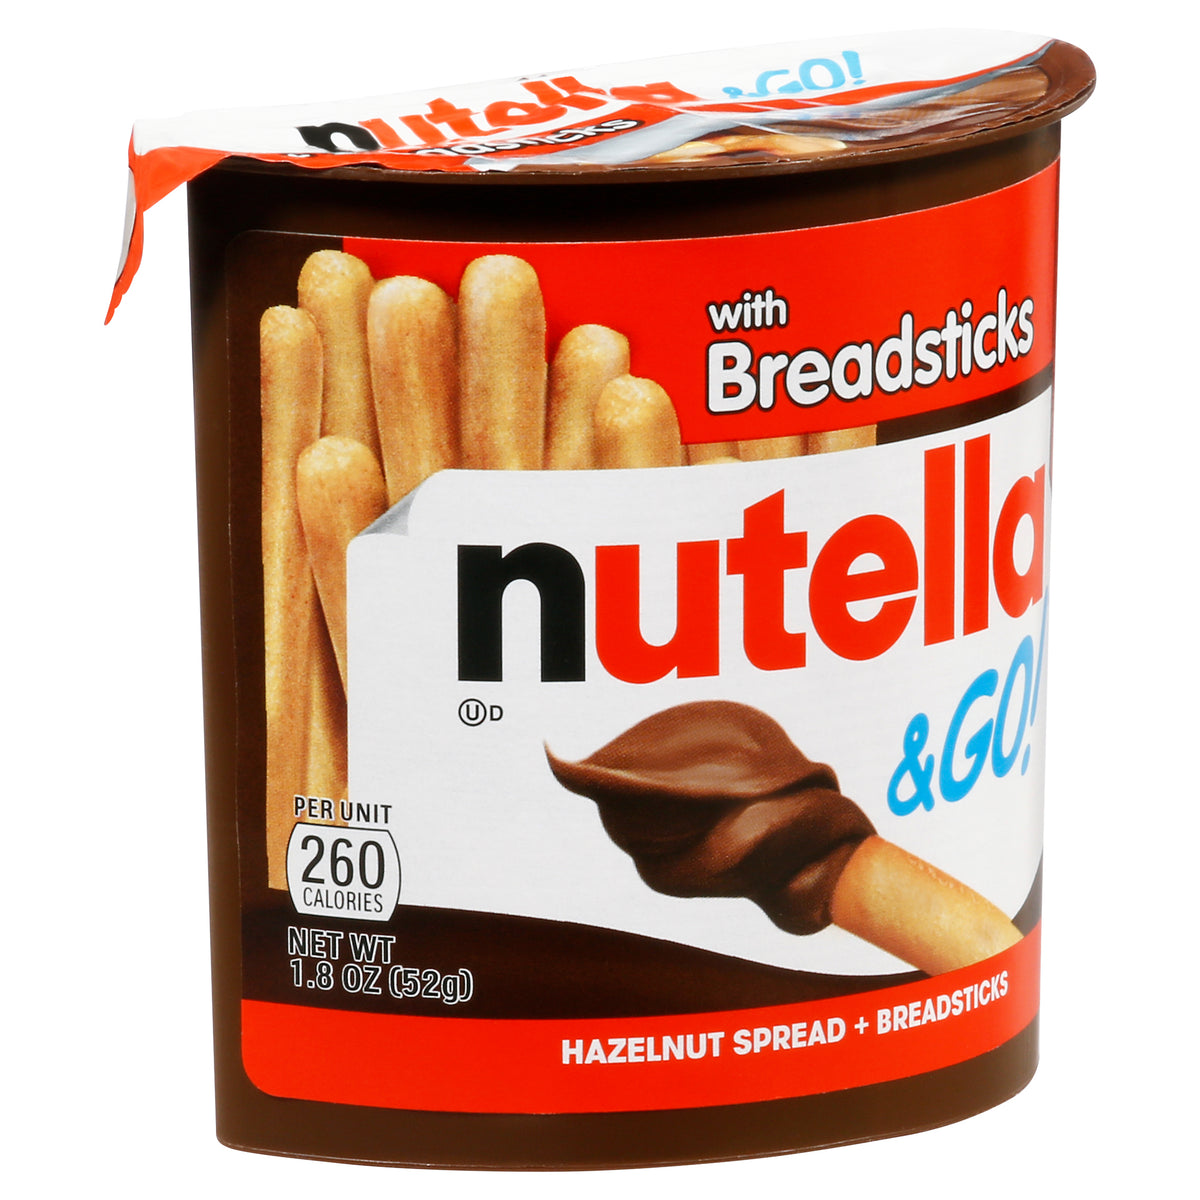 Nutella and Go! Hazelnut Spread + Breadsticks 1.8 oz — Little Red Box Grocery